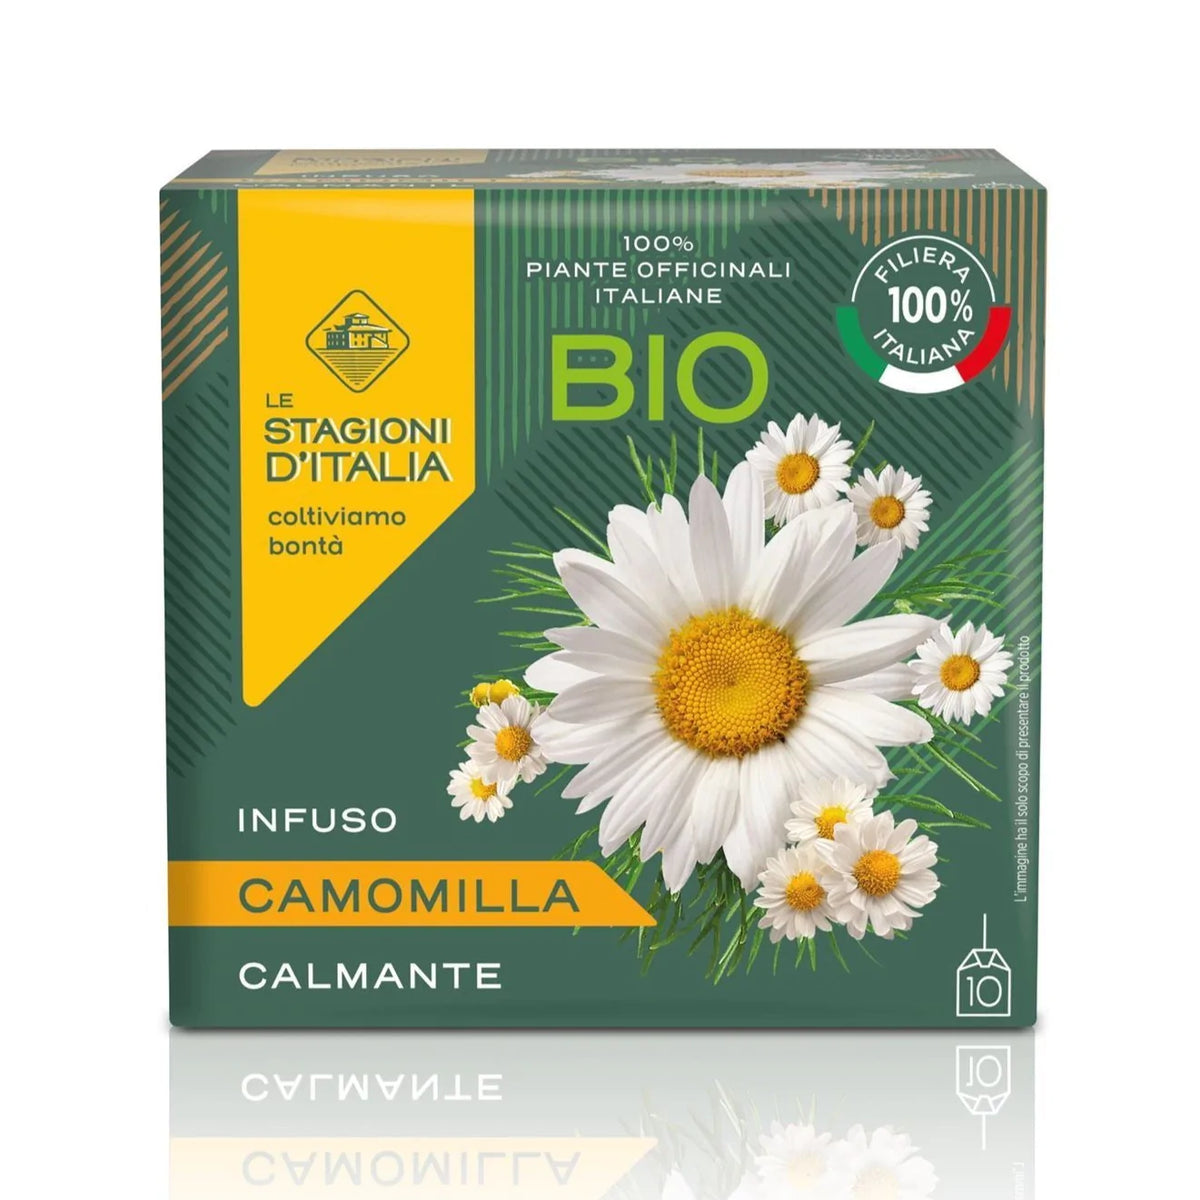 De seizoenen van Italië Infusion Chamomile Bio kalmerend 15 gram